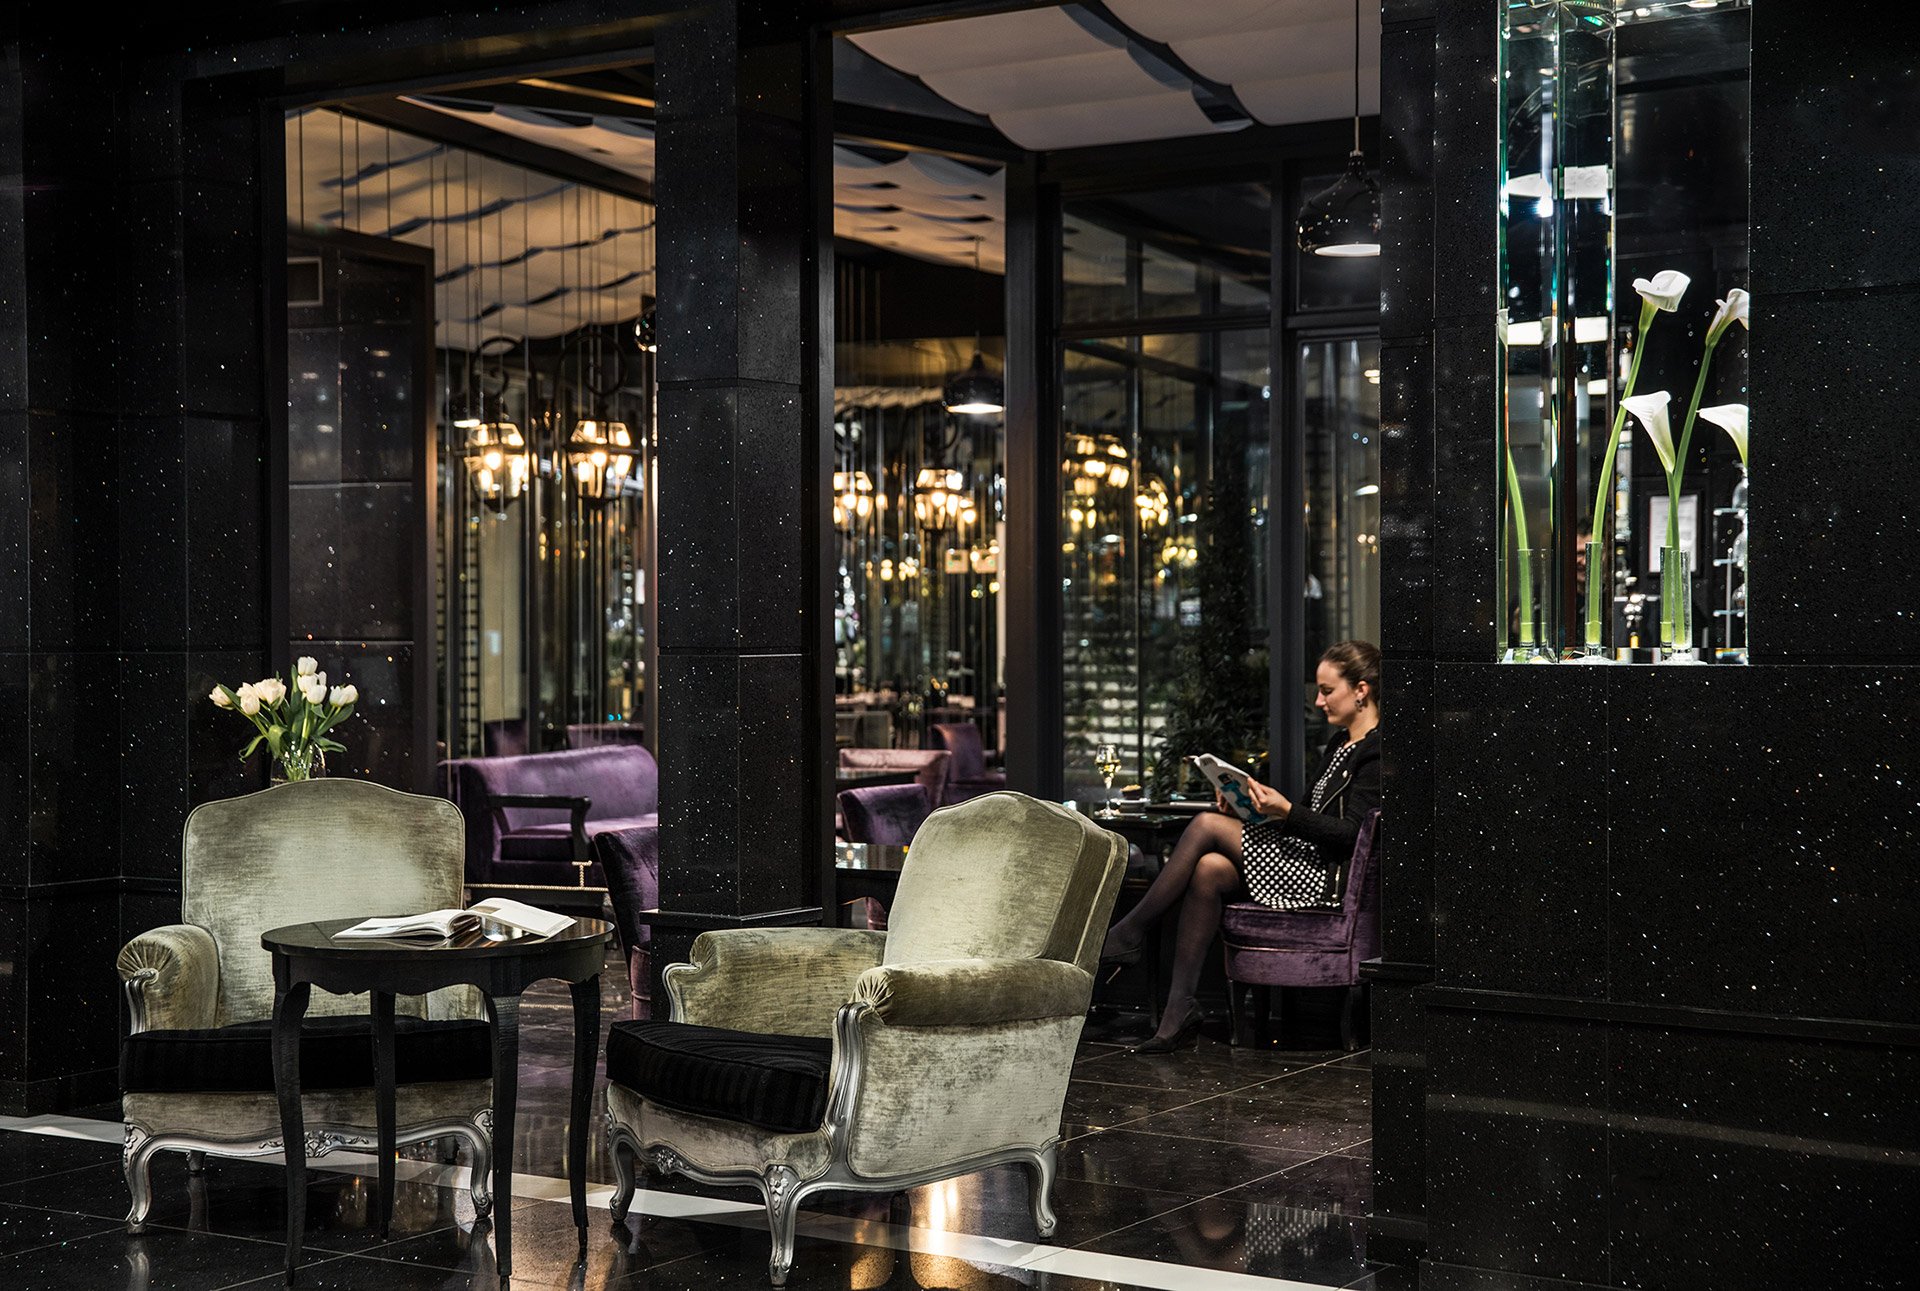 Maison Albar Hotels Le Diamond | Hotel near Galeries Lafayette department store in Paris